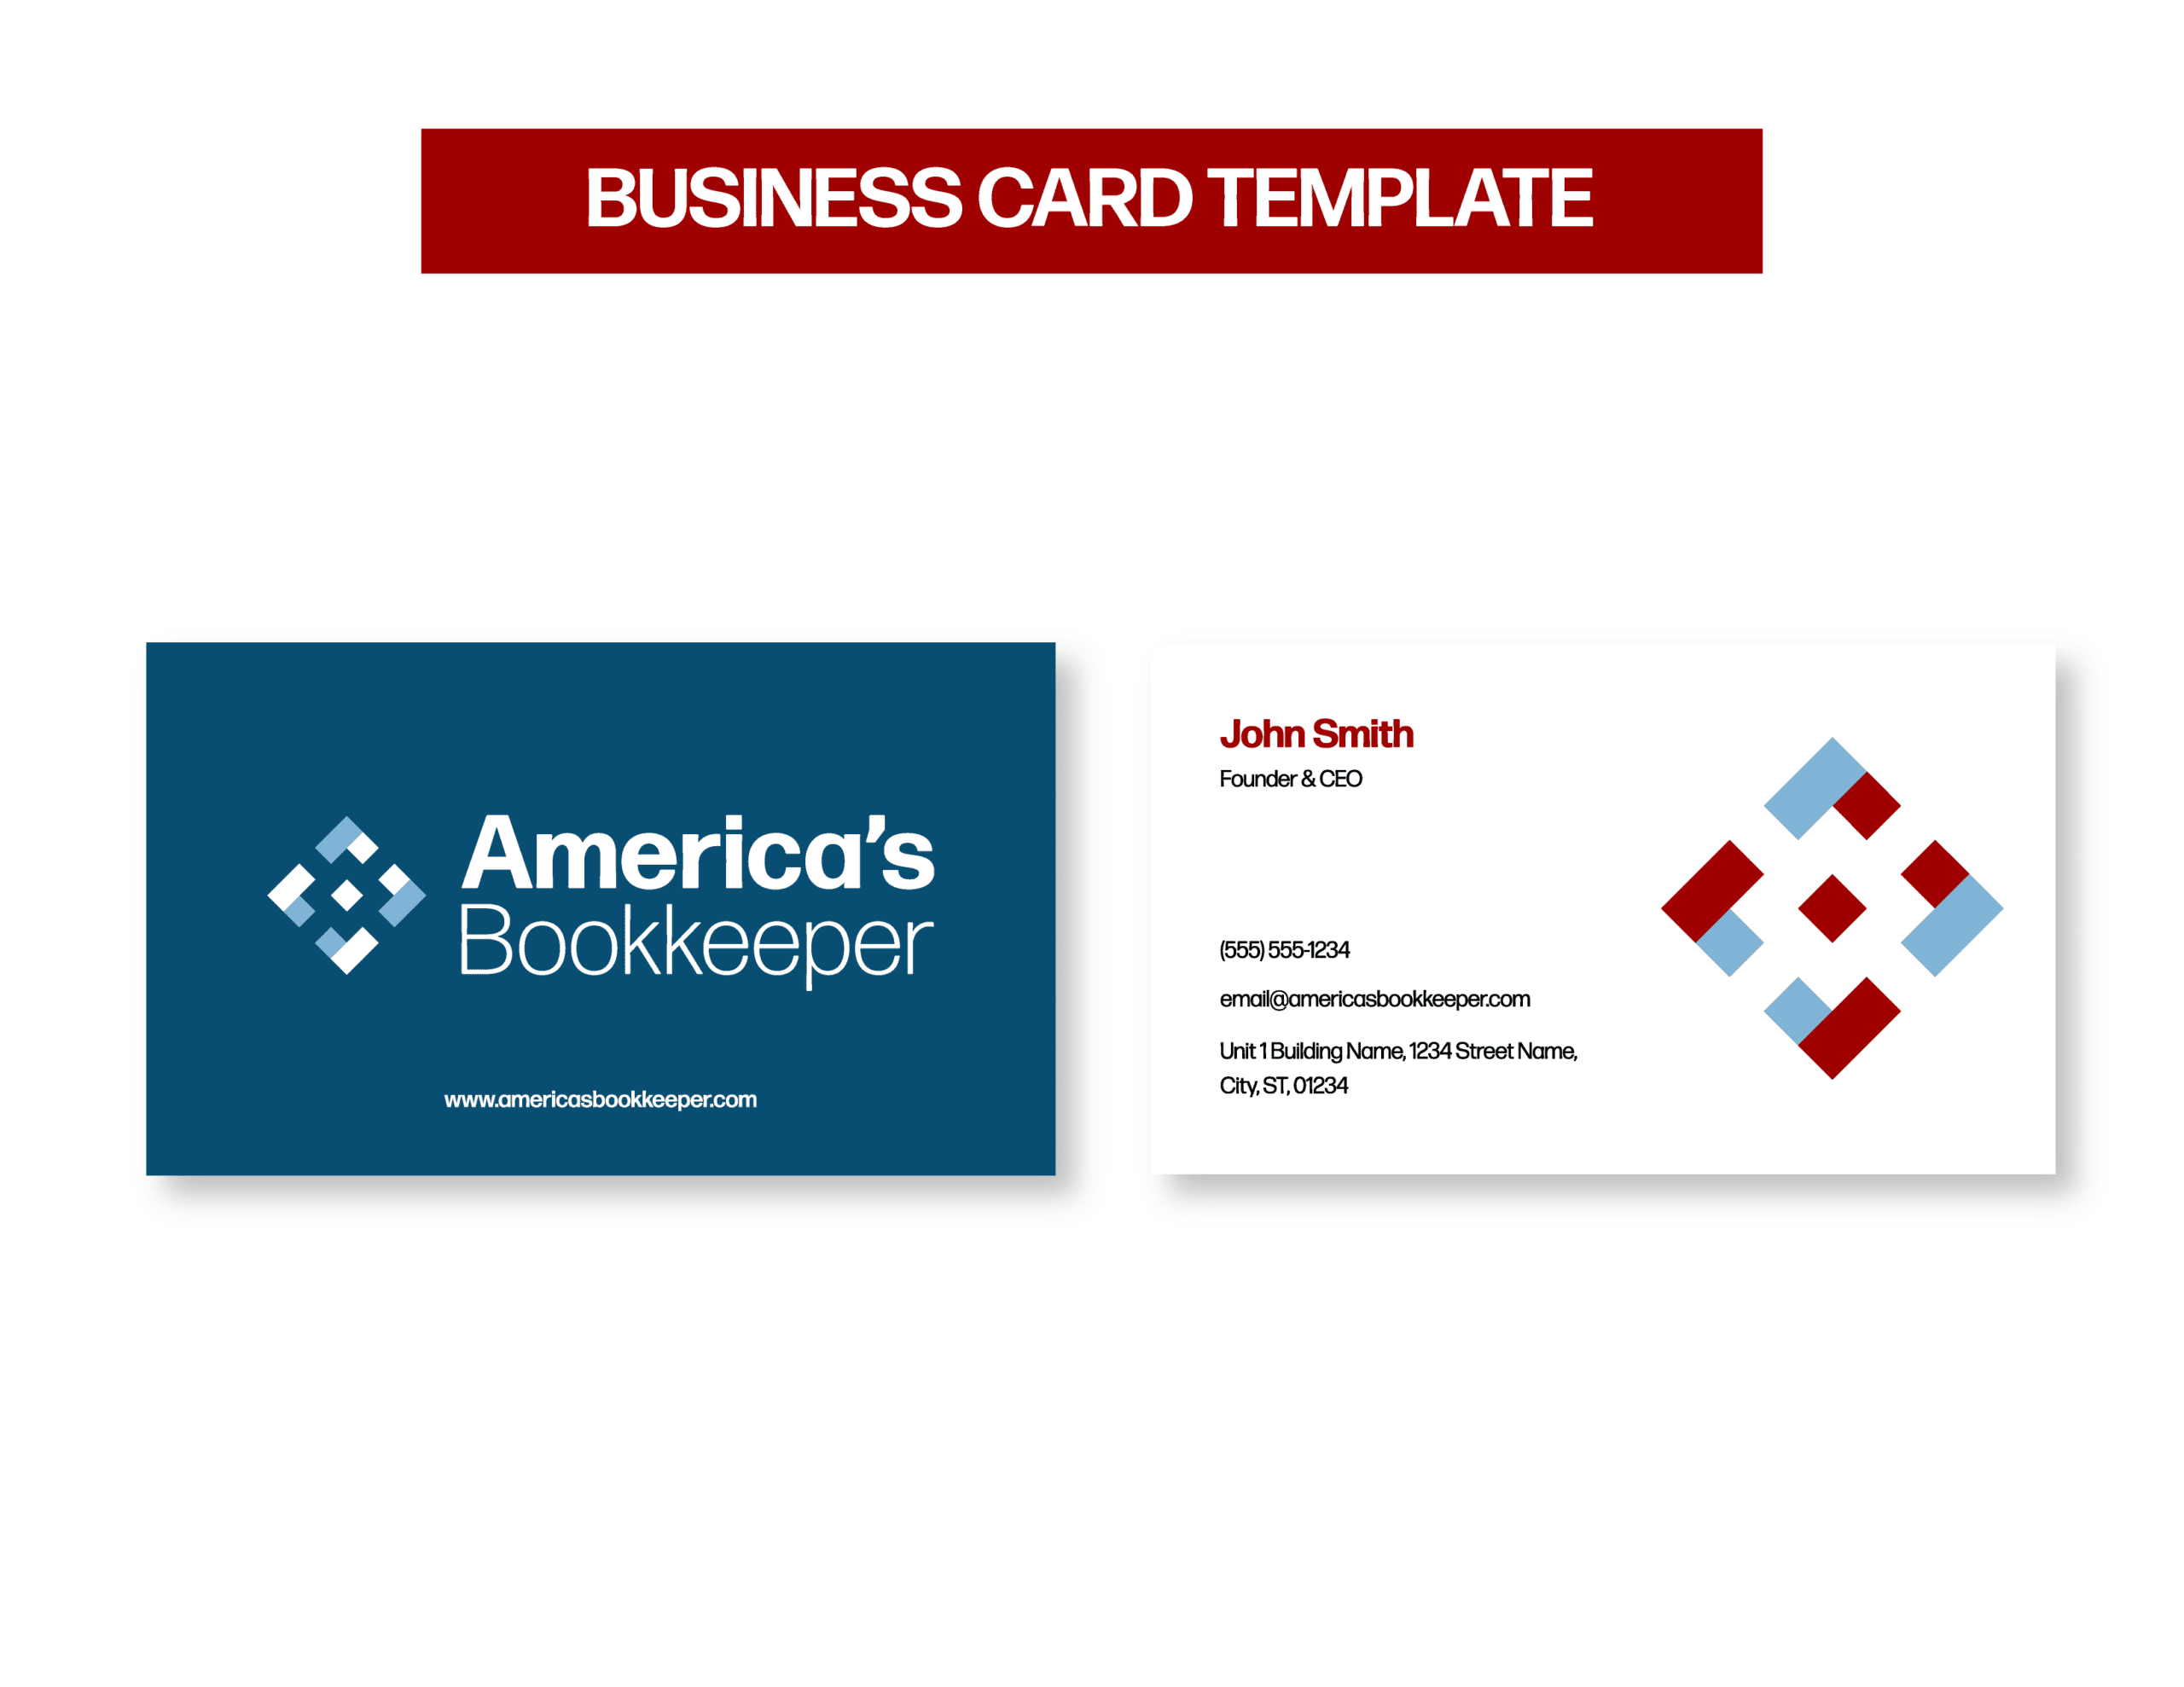 04Americas_Showcase_Business Card Template